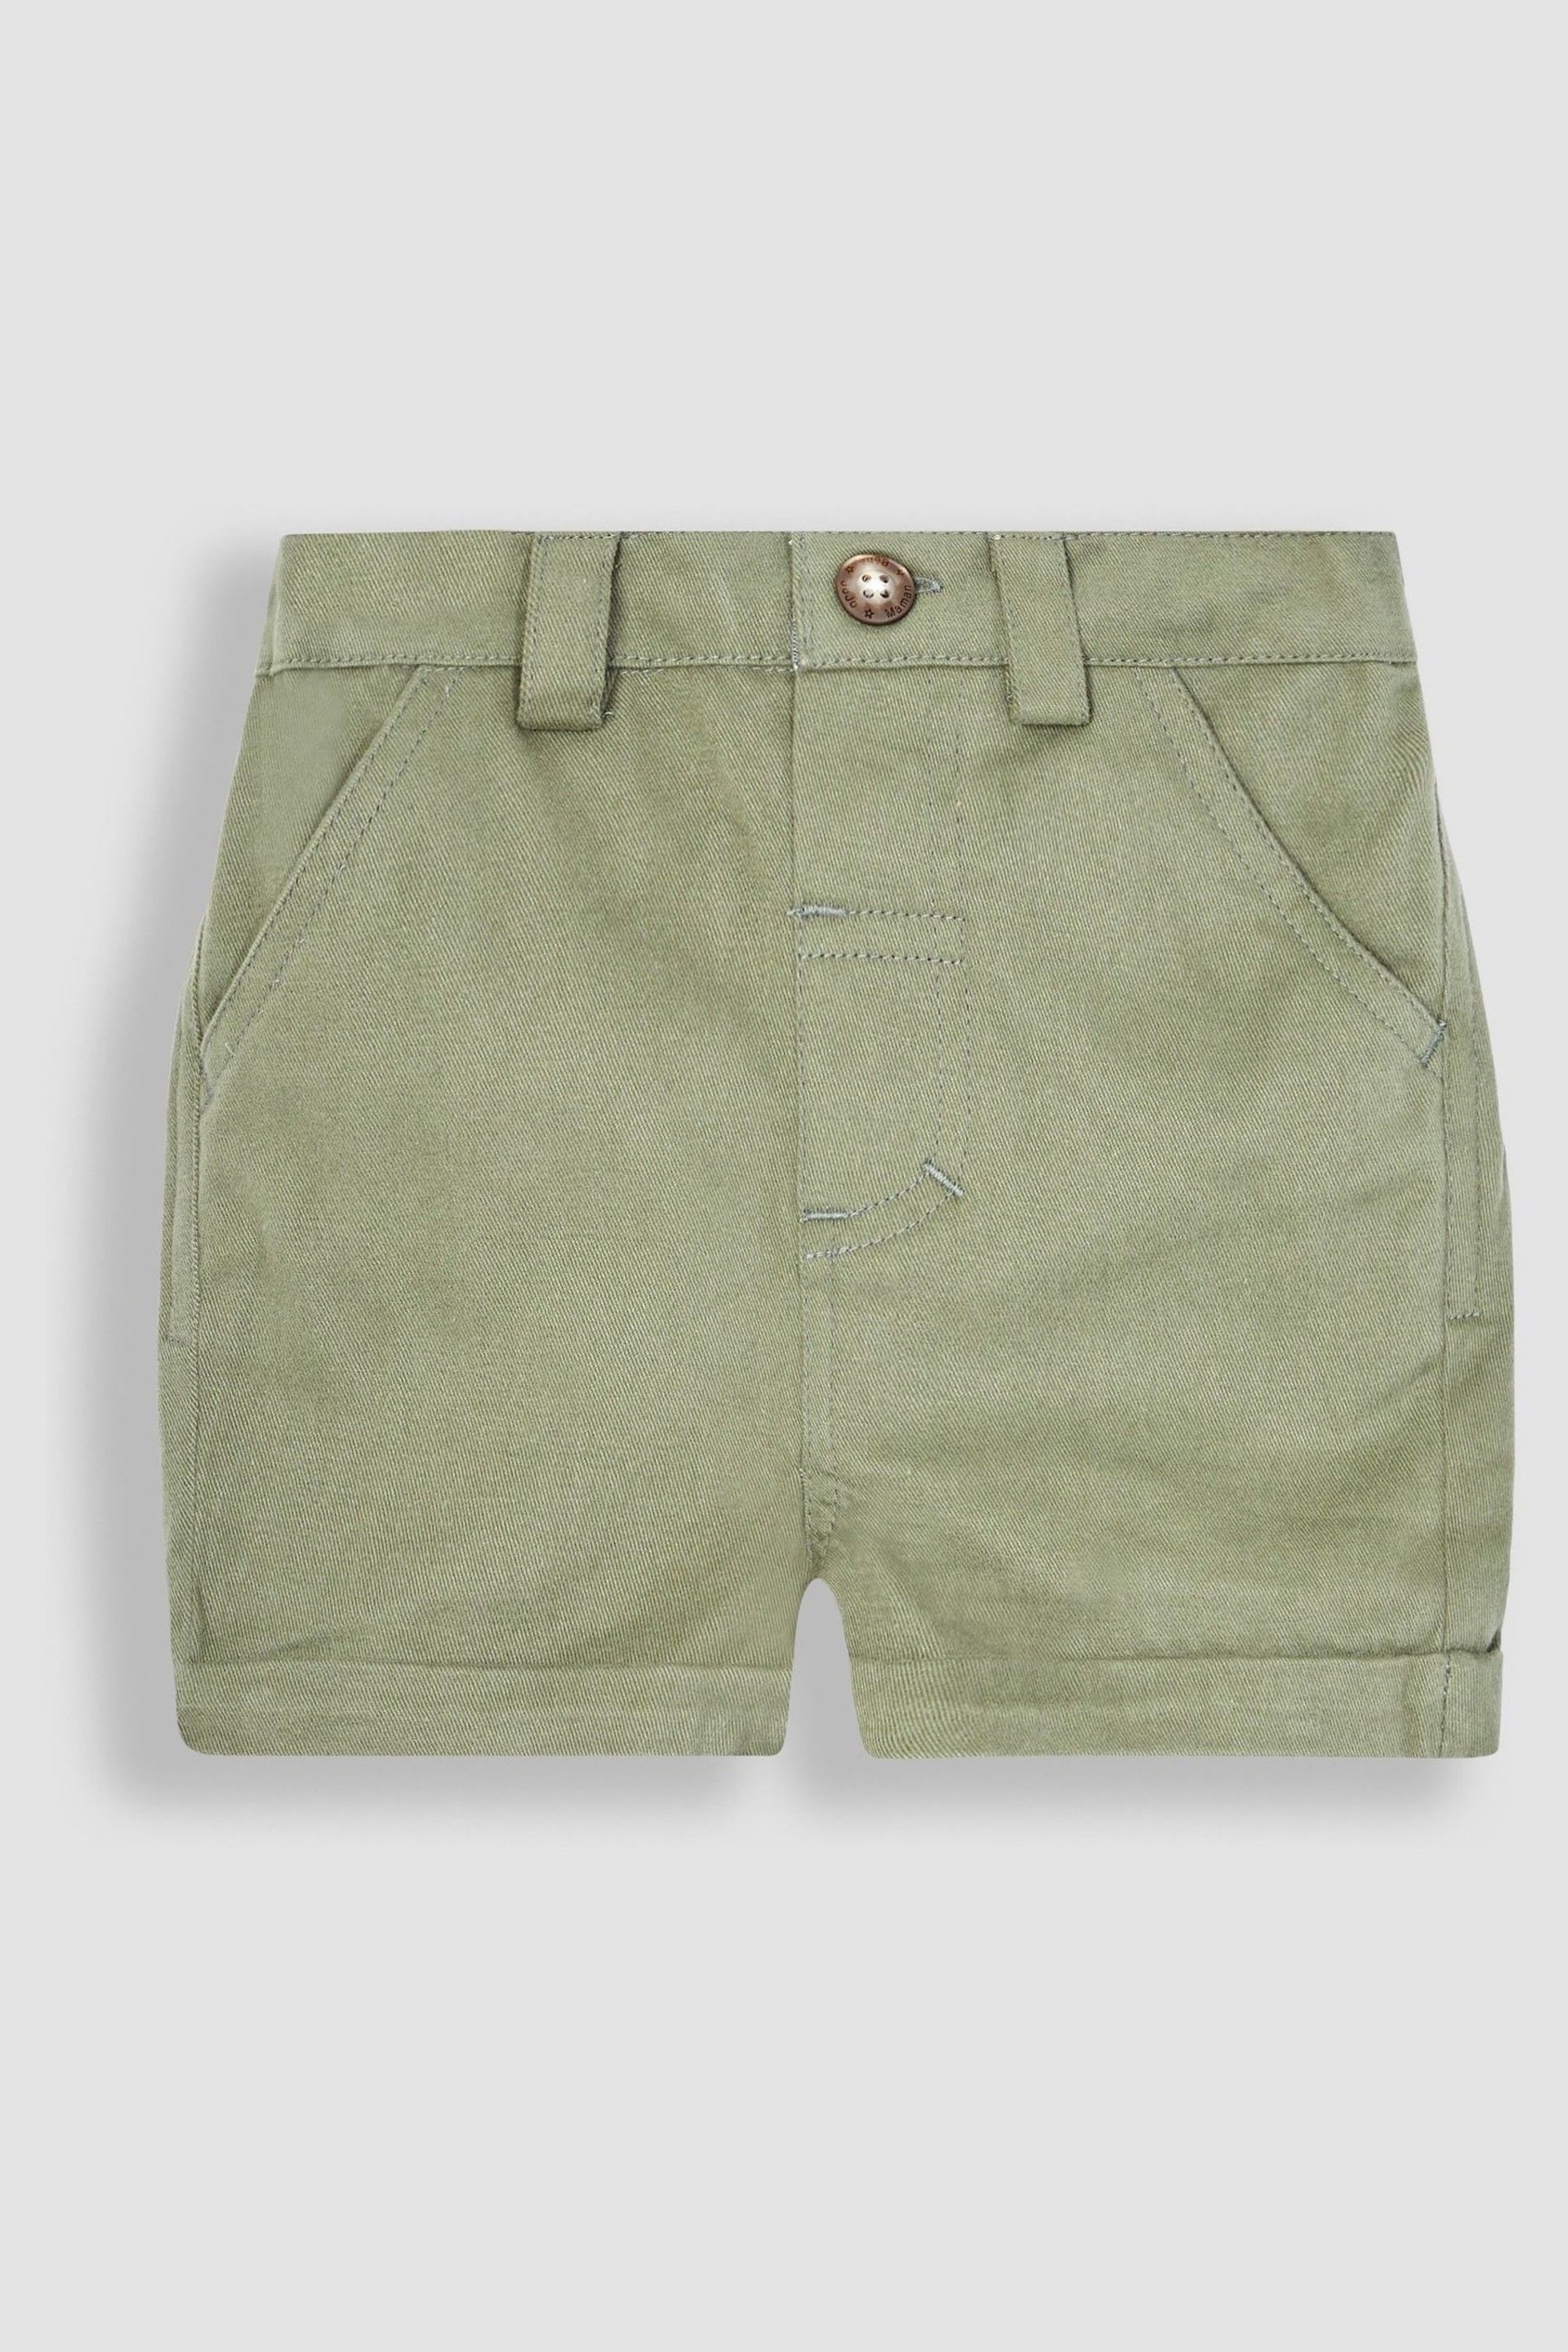 JoJo Maman Bébé Khaki Green Twill Chino Shorts - Image 1 of 3